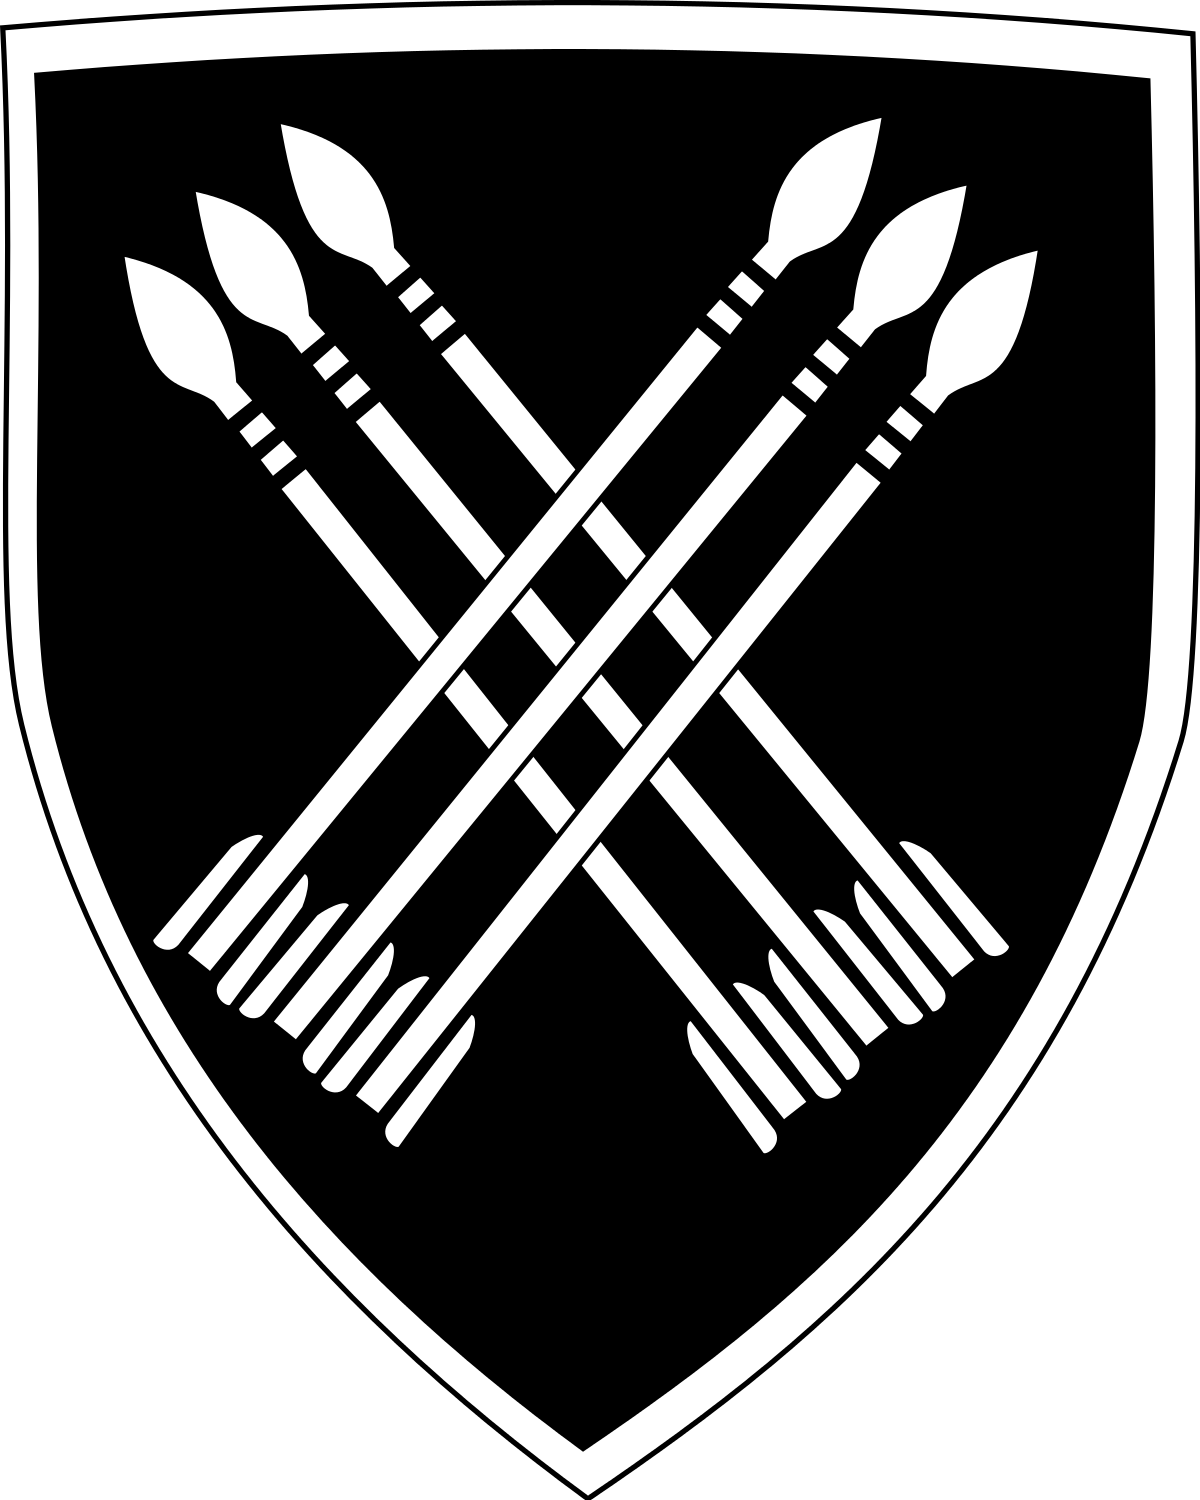 Battalion South Africa Wikipedia